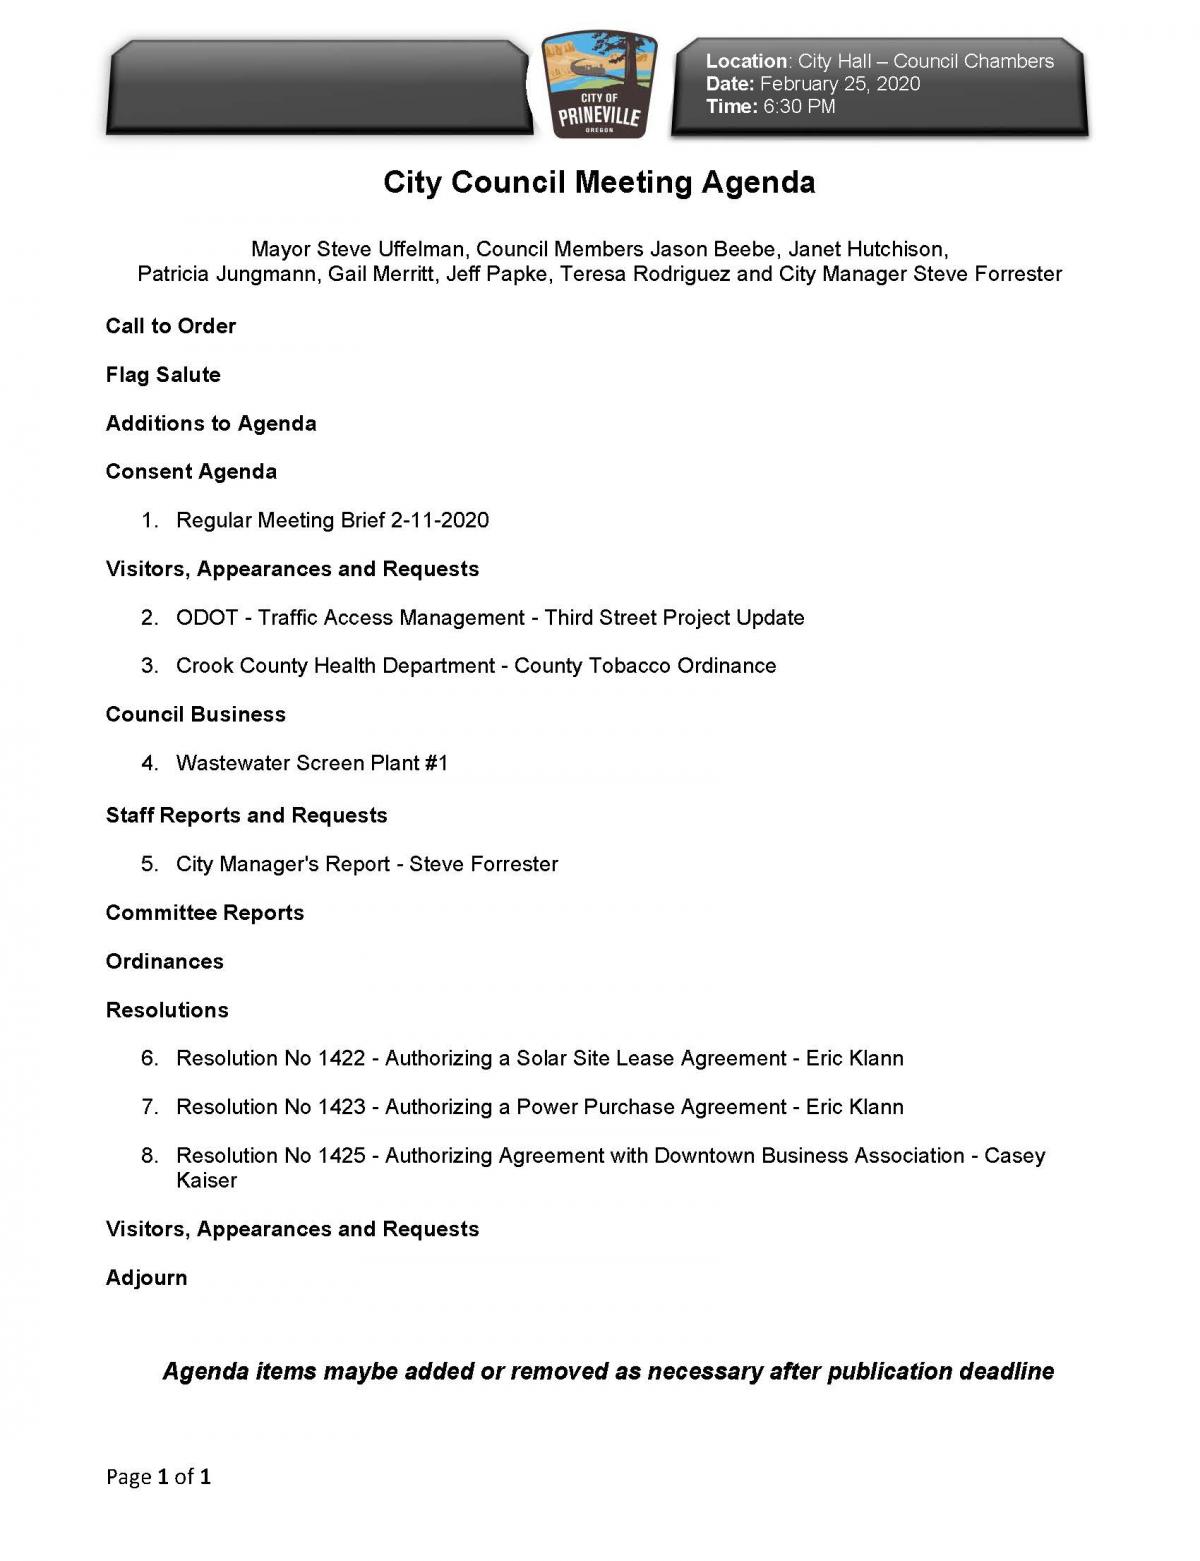 Council Meeting Agenda 2-25-2020